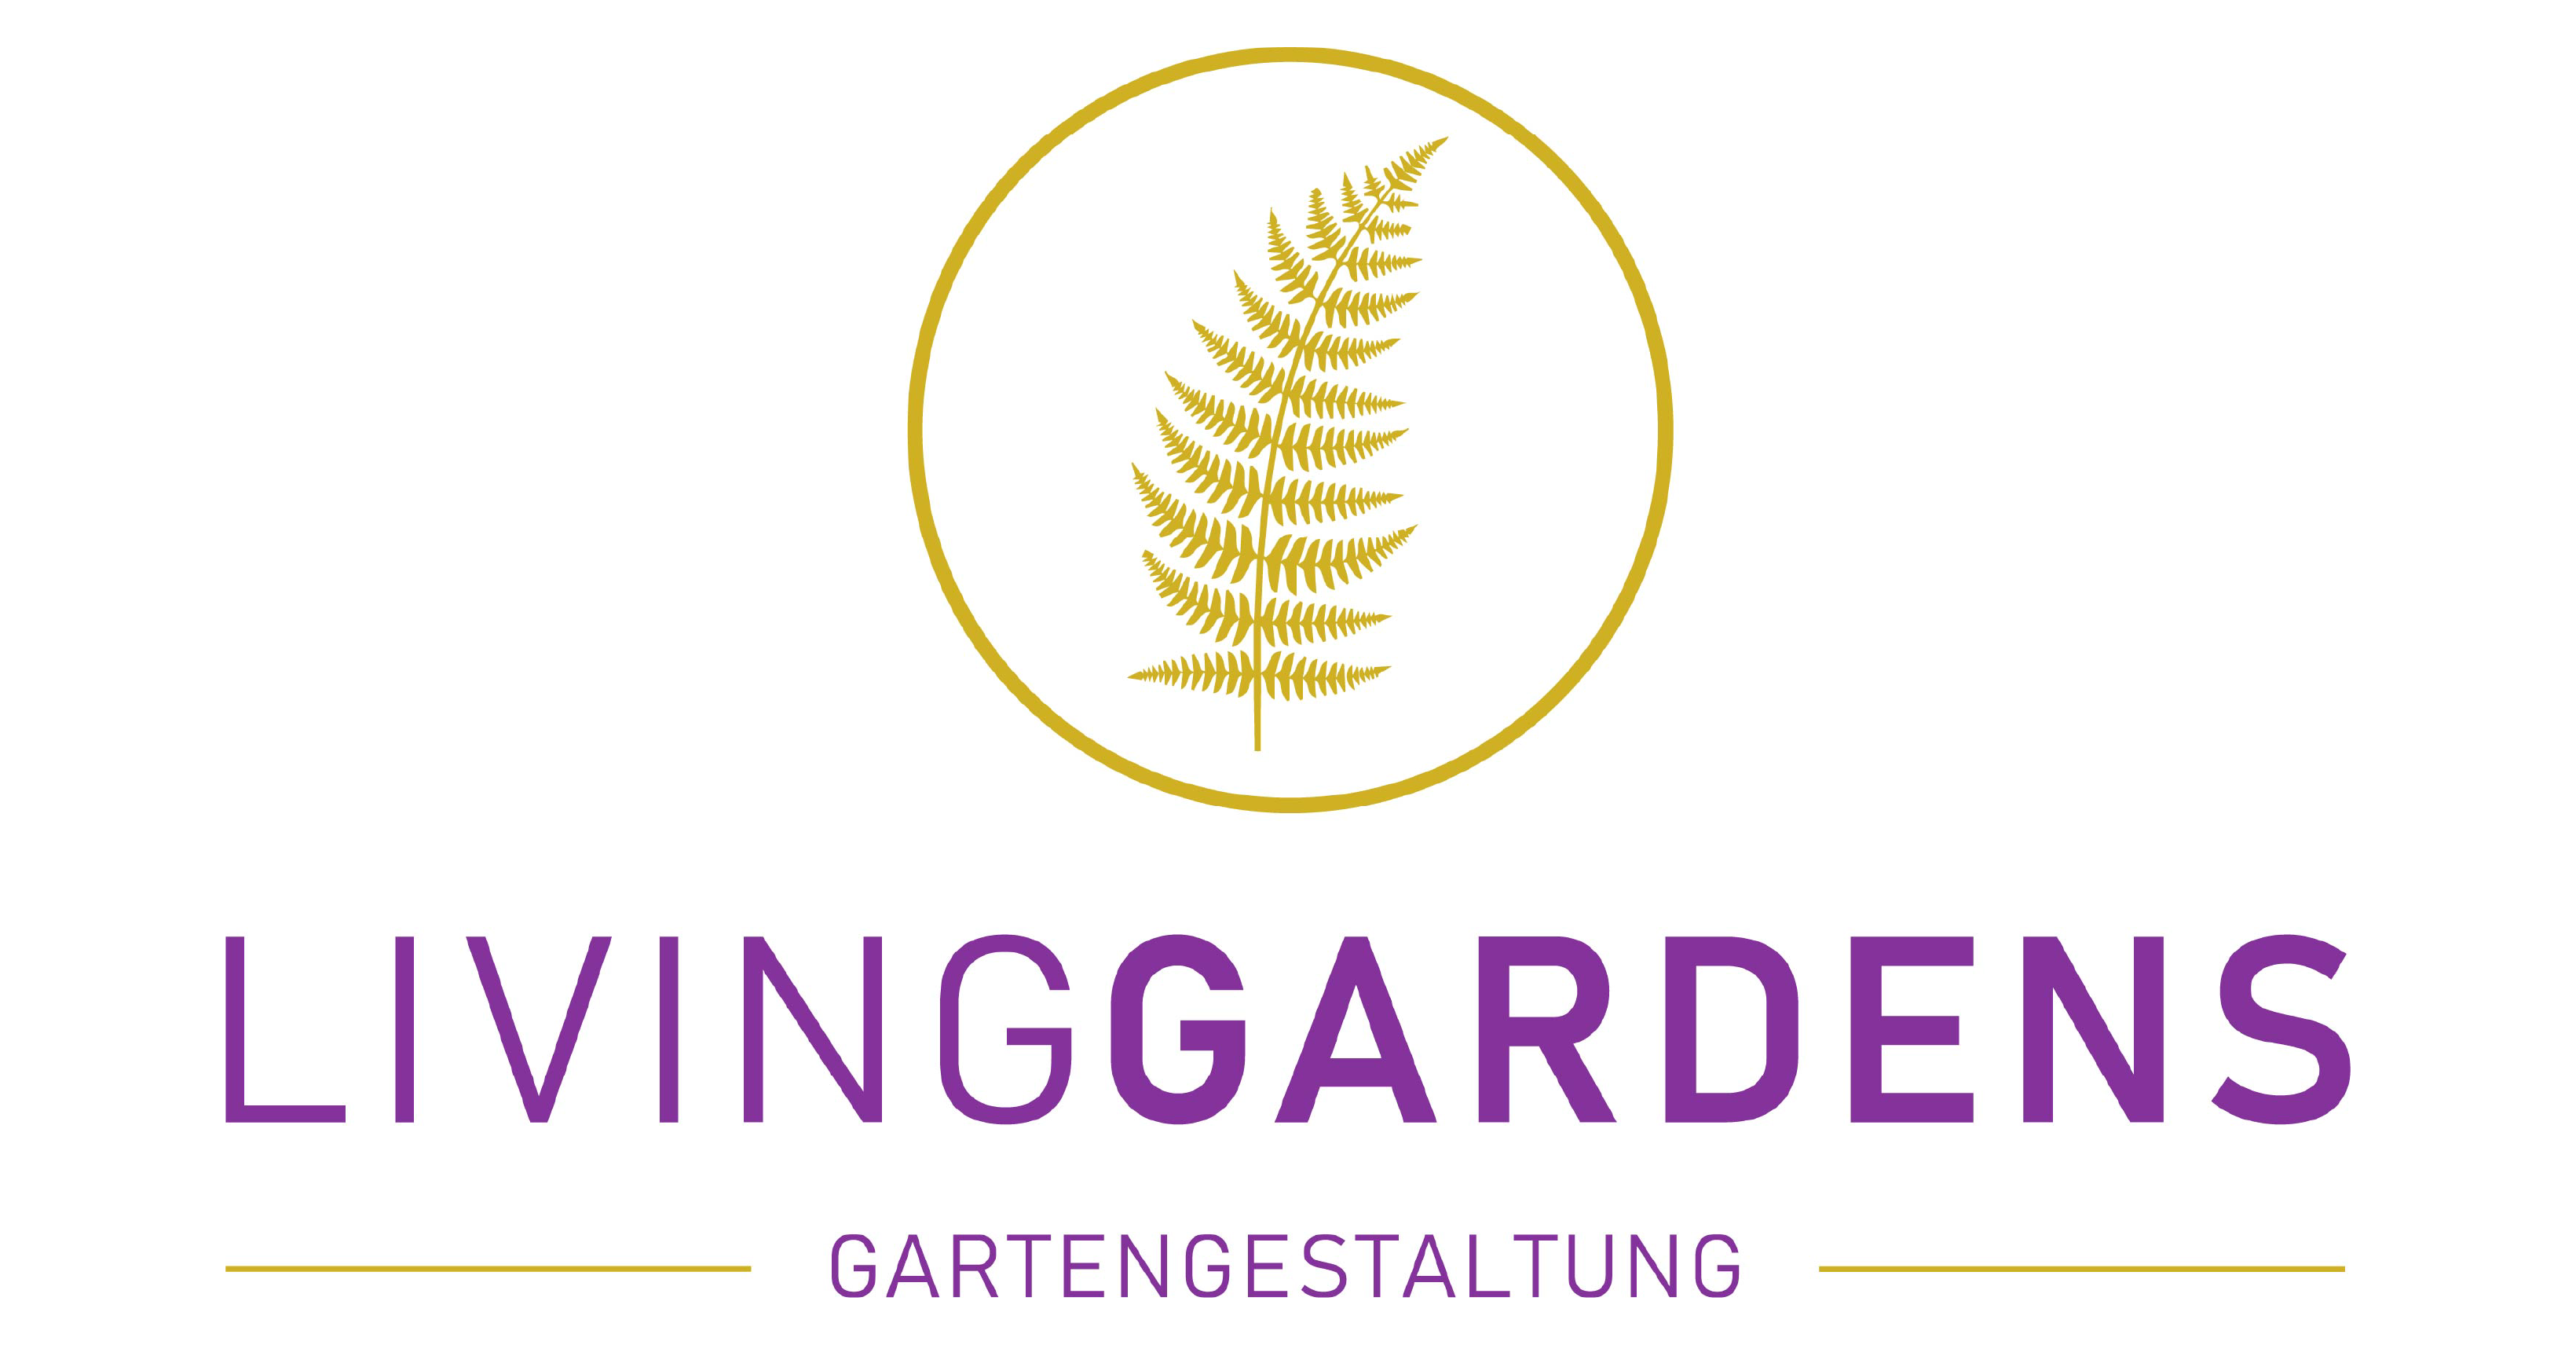 Living Gardens Gartengestaltung GmbH